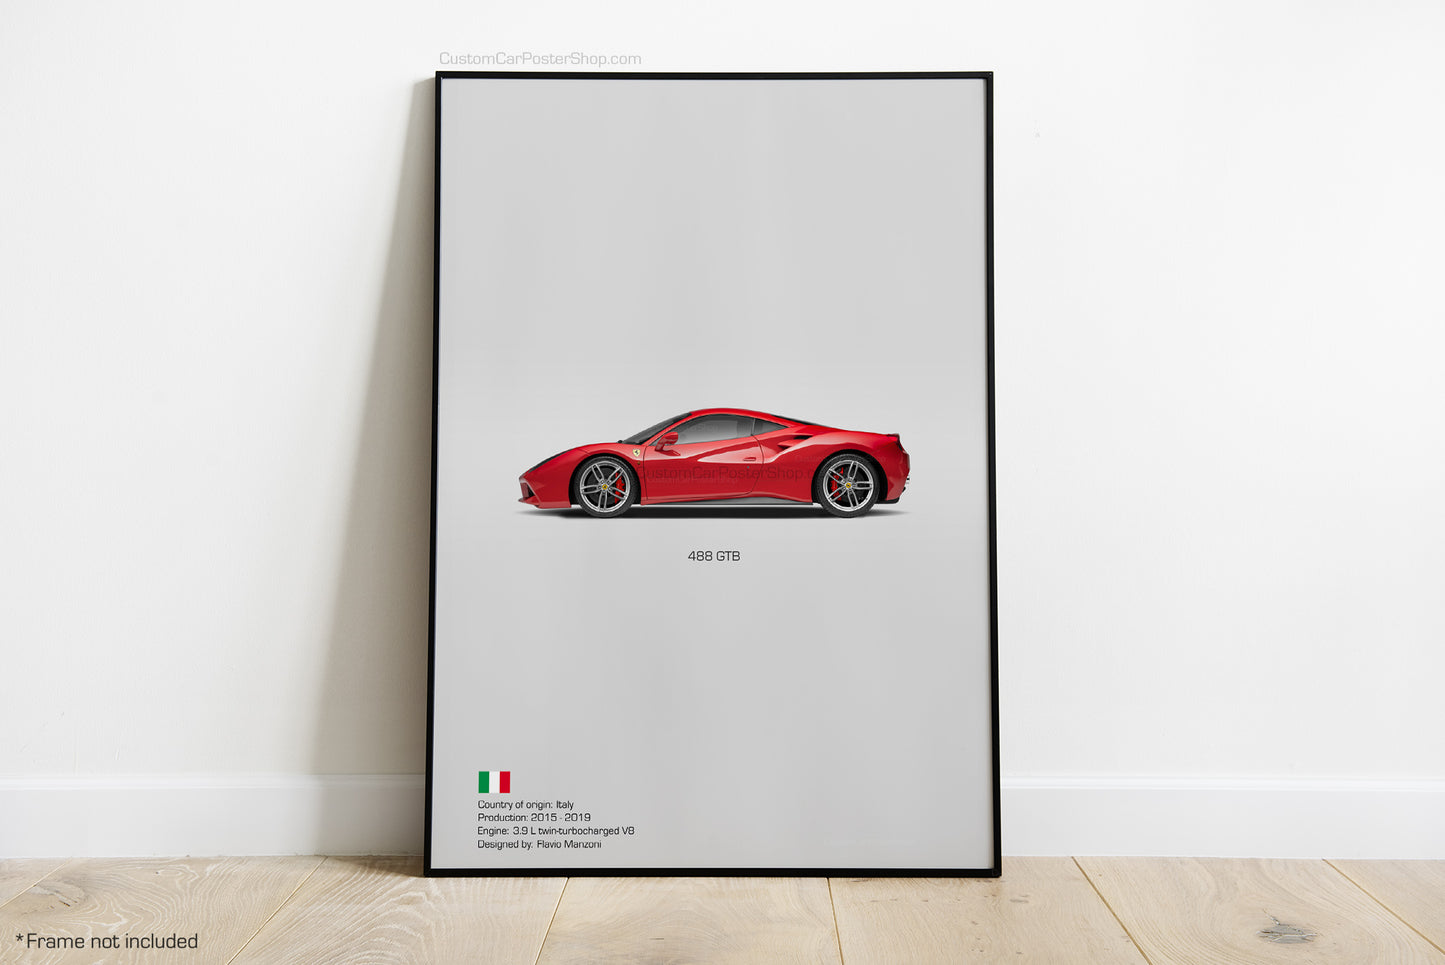 Ferrari 488 GTB Poster - Wall Decor Wall Art